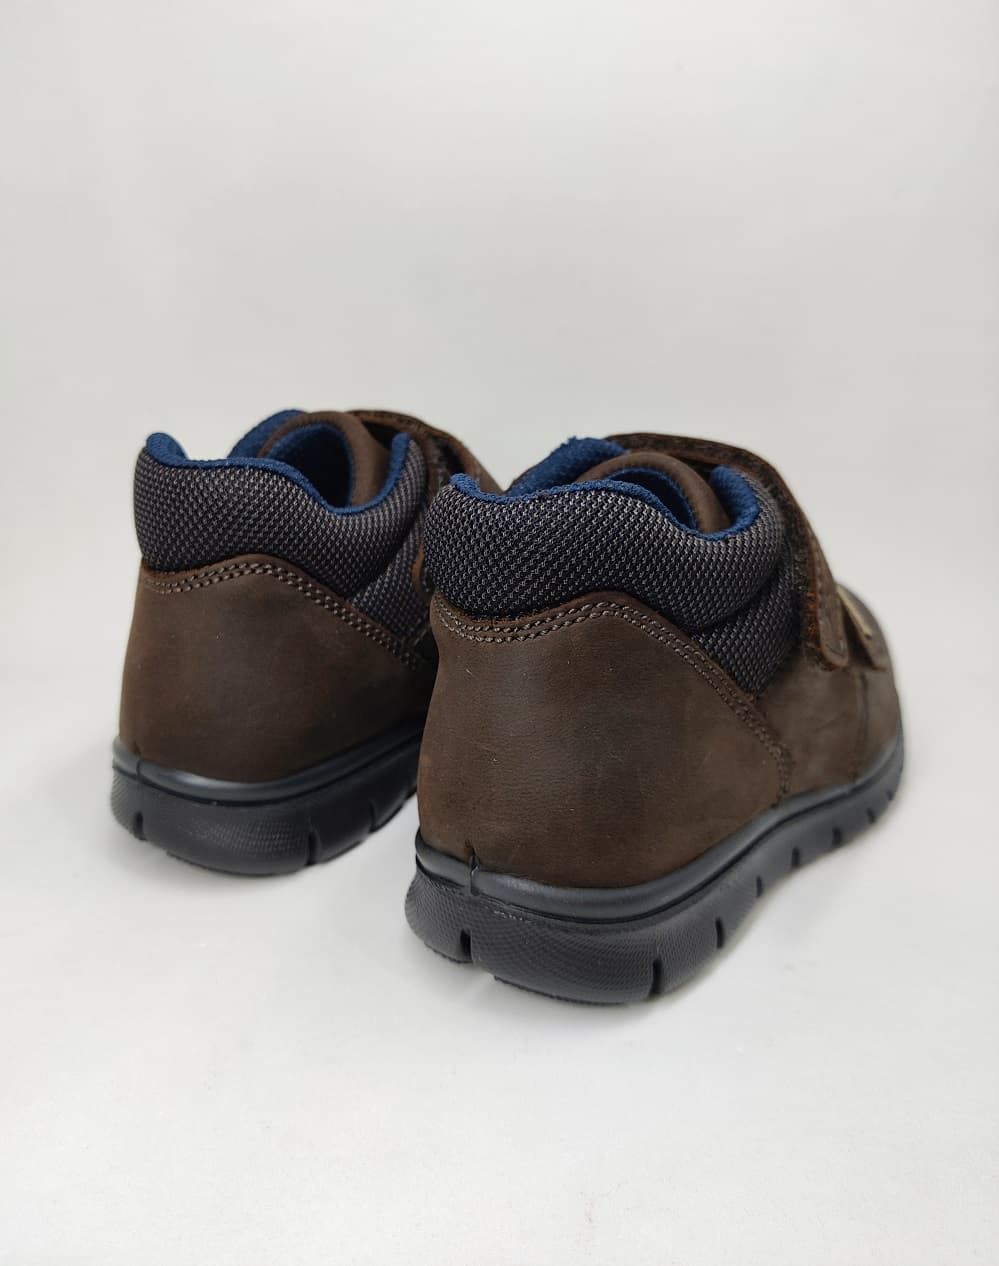 Primigi Gore-tex boots for children Brown leather - Image 3